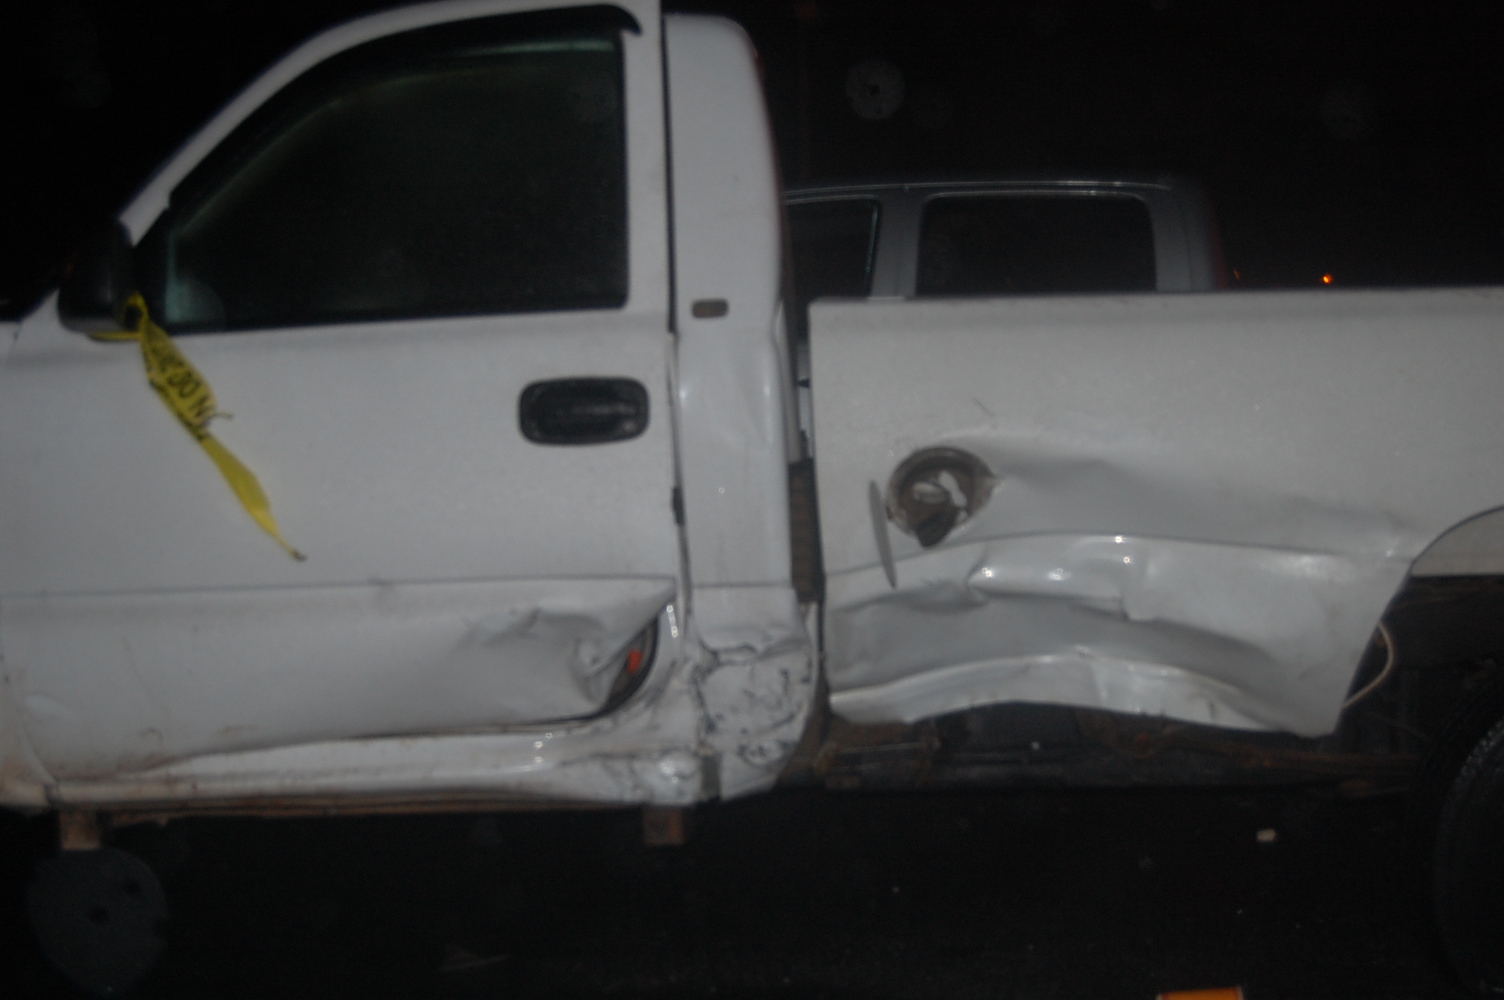 Liem T. Buyen was near his white 2003 Chevrolet Silverado when he was hit. (Courtesy Virginia State Police)